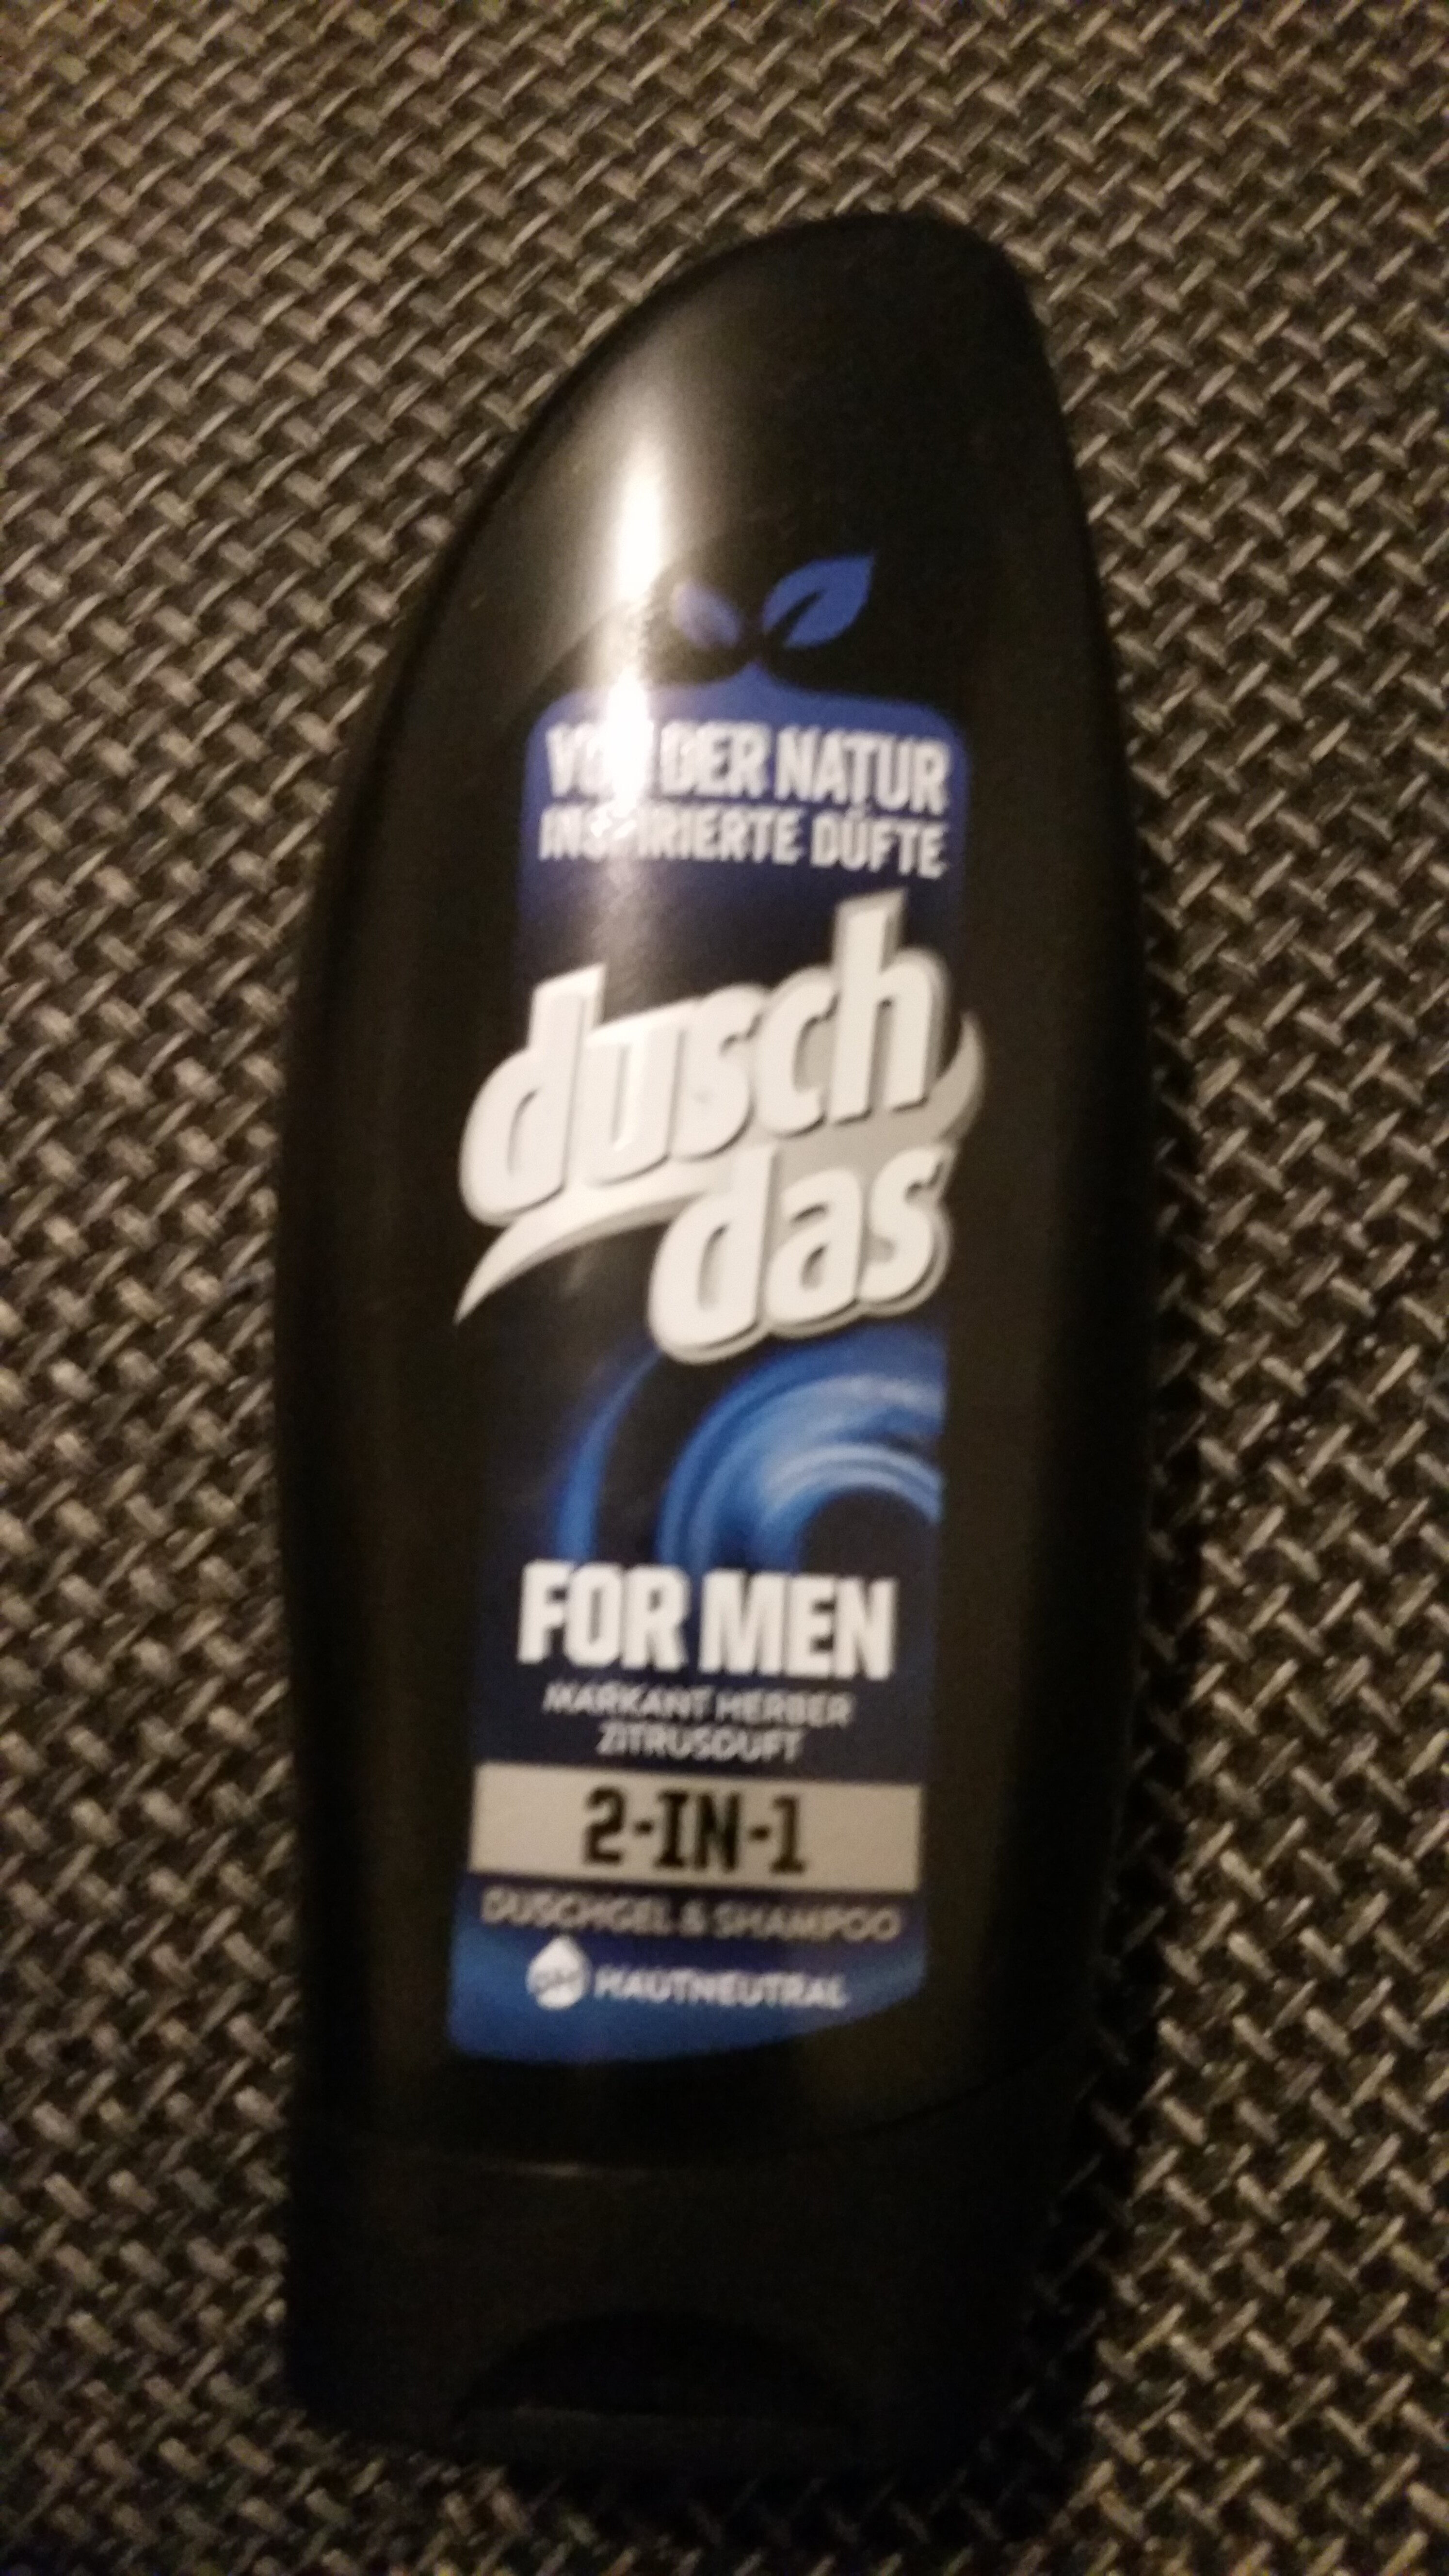 Dusch Das for Men - Product - en